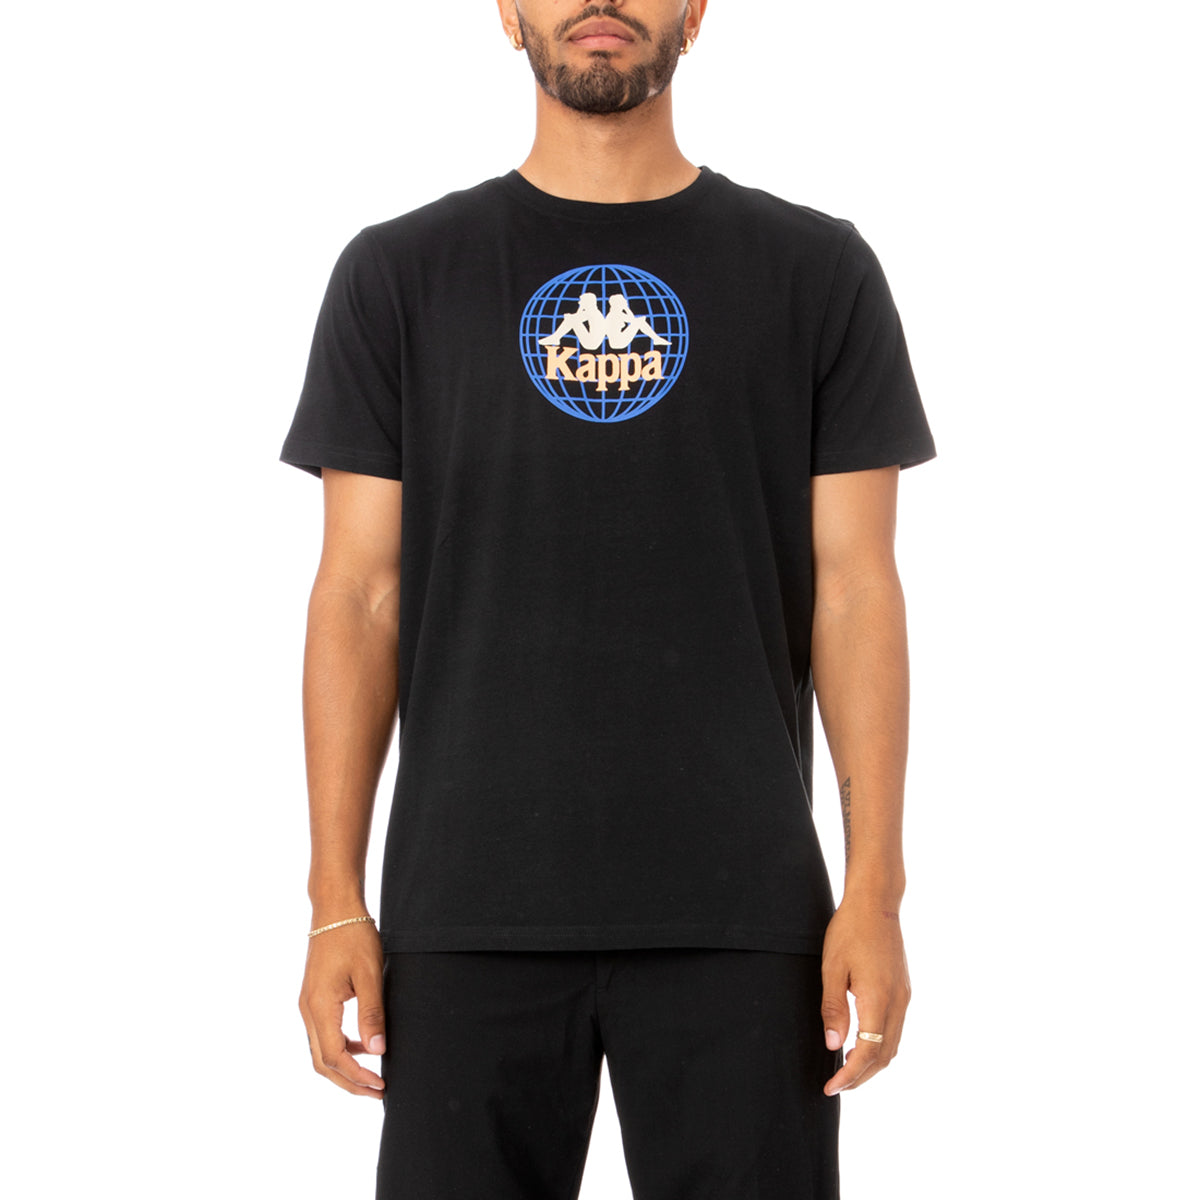 T-shirt Ajoban Noir homme - image 1